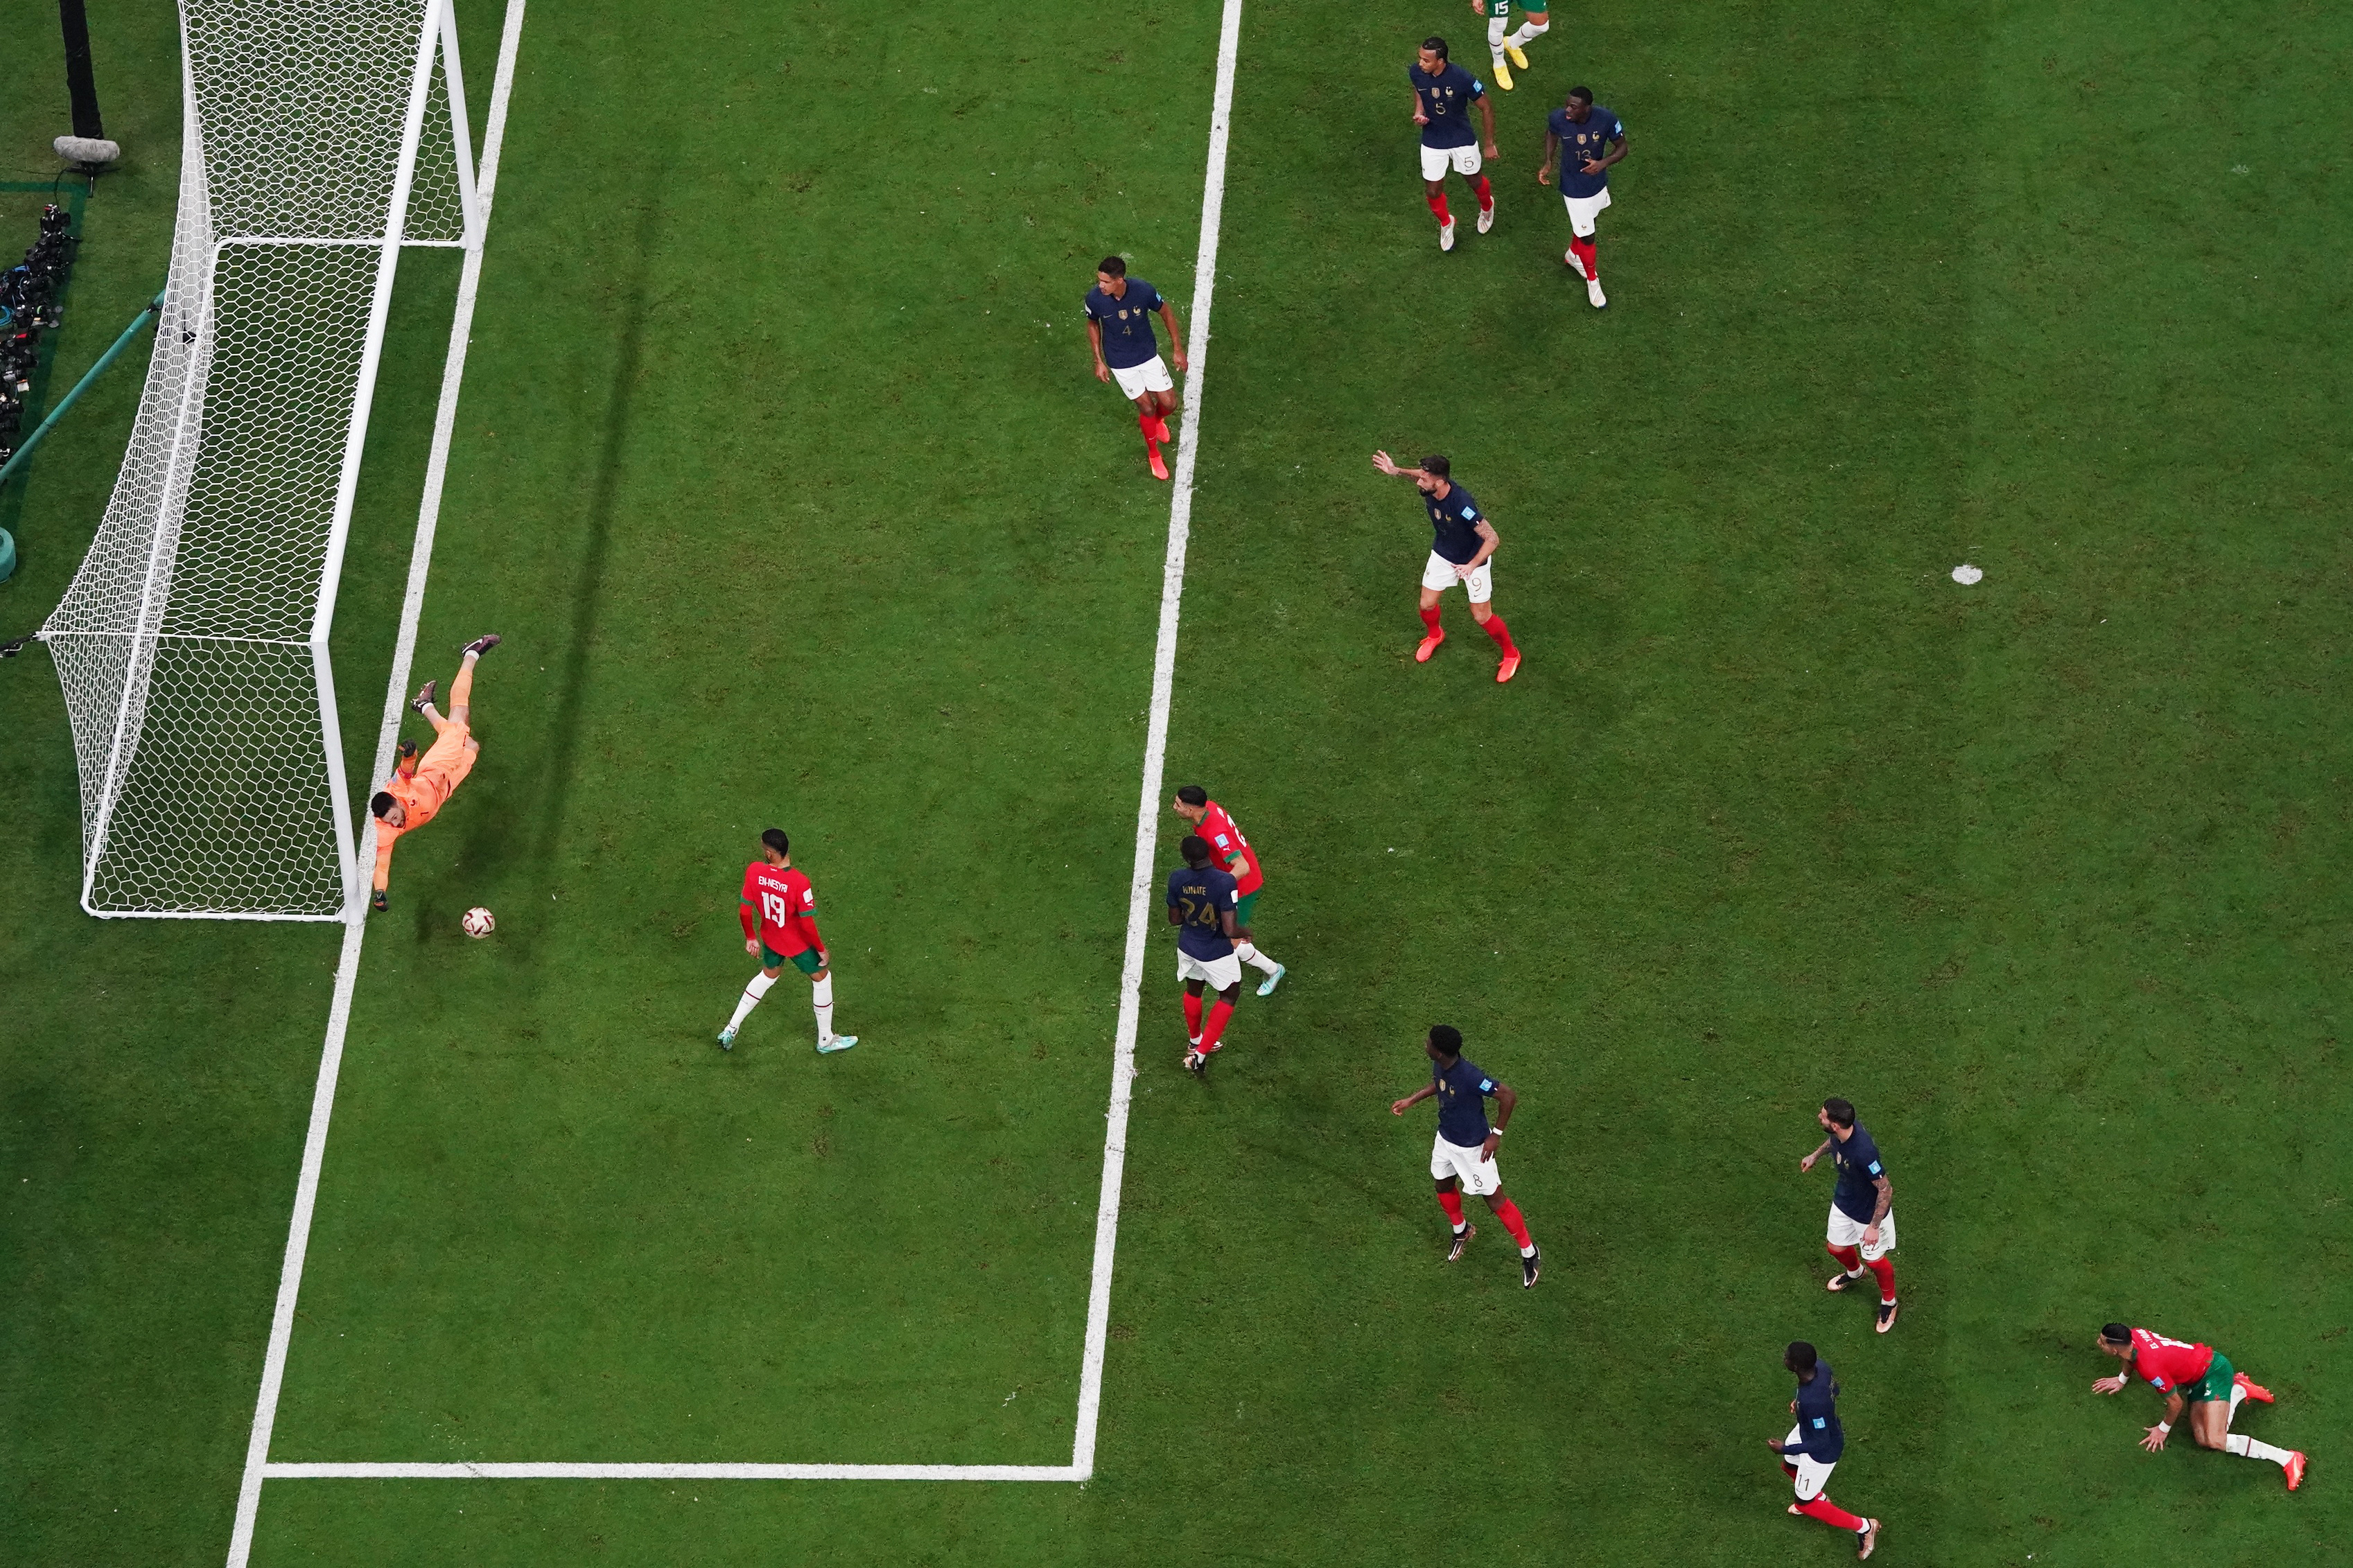 Théo Hernandez, France's Goalscorer, Stepped Up After His Brother